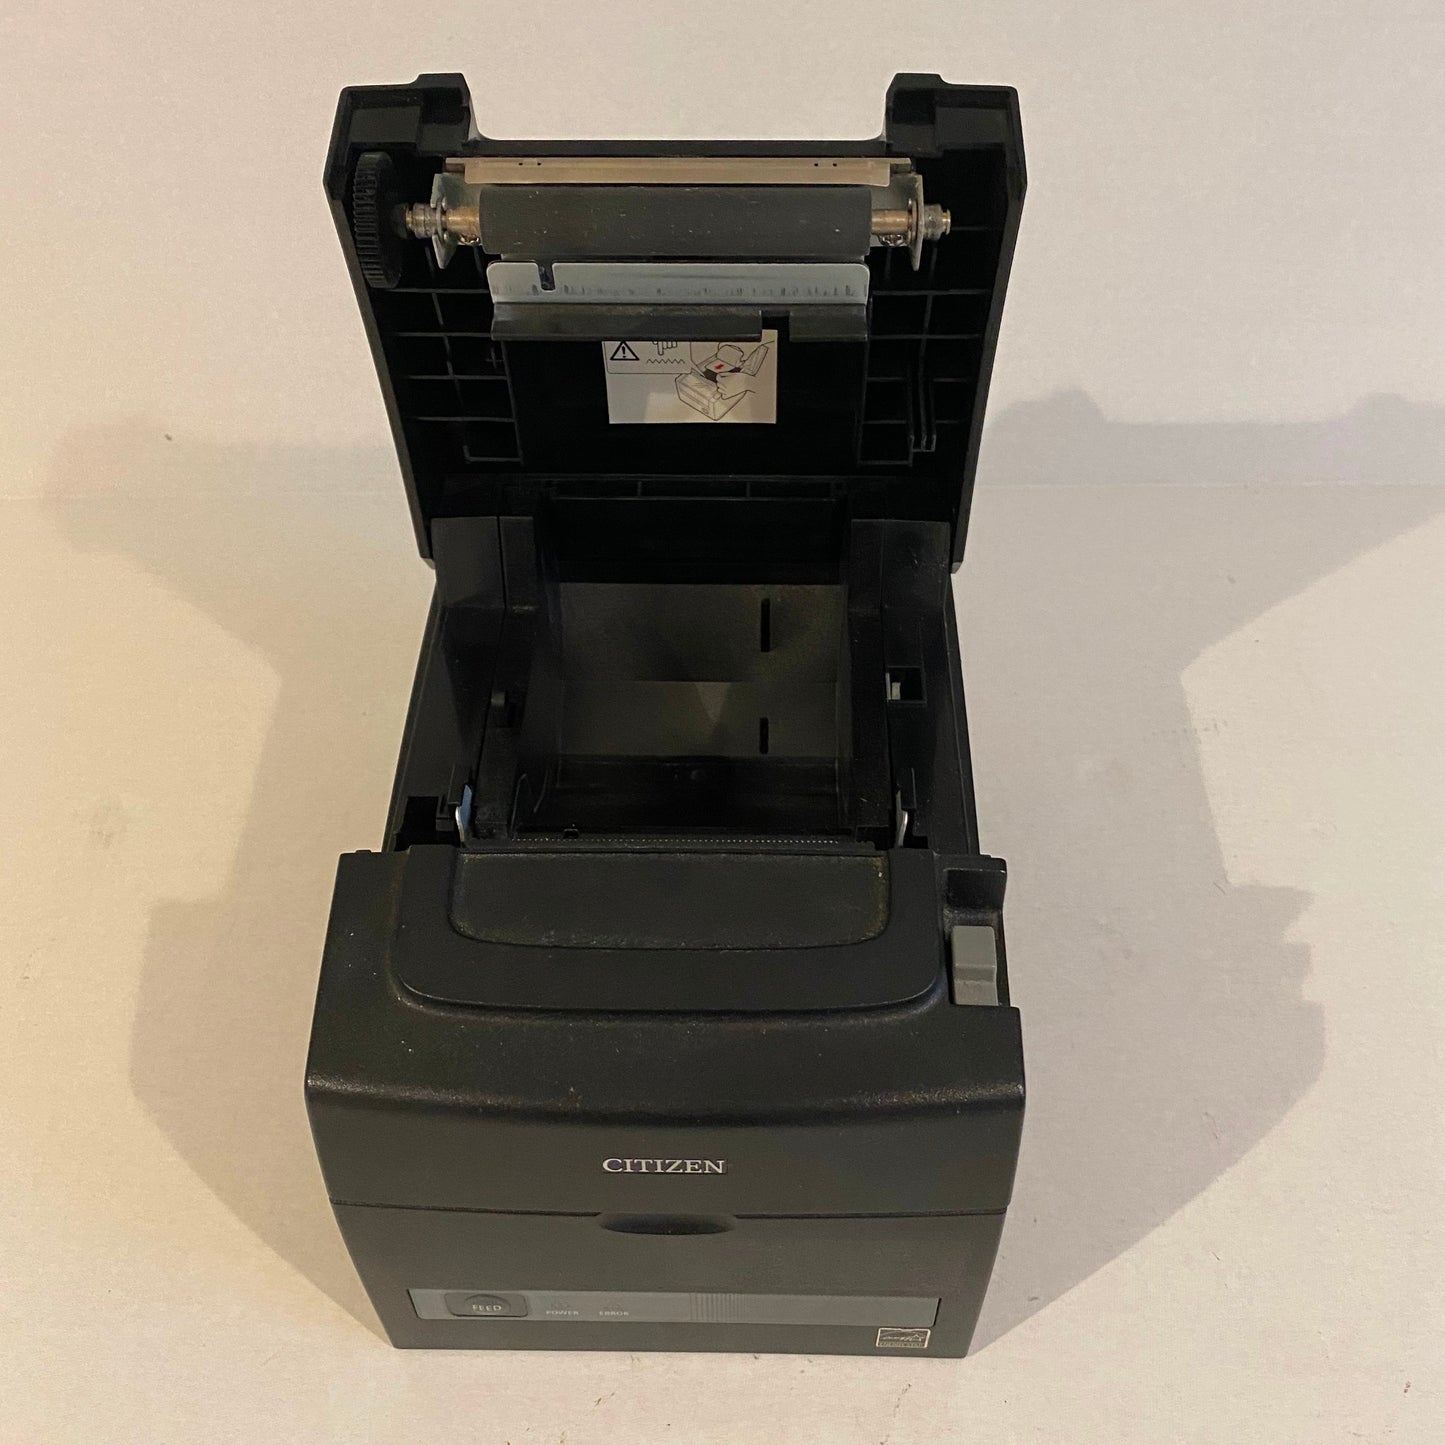 Citizen Thermal Receipt Printer - TZ30-M01 - CT-S310IIUBK